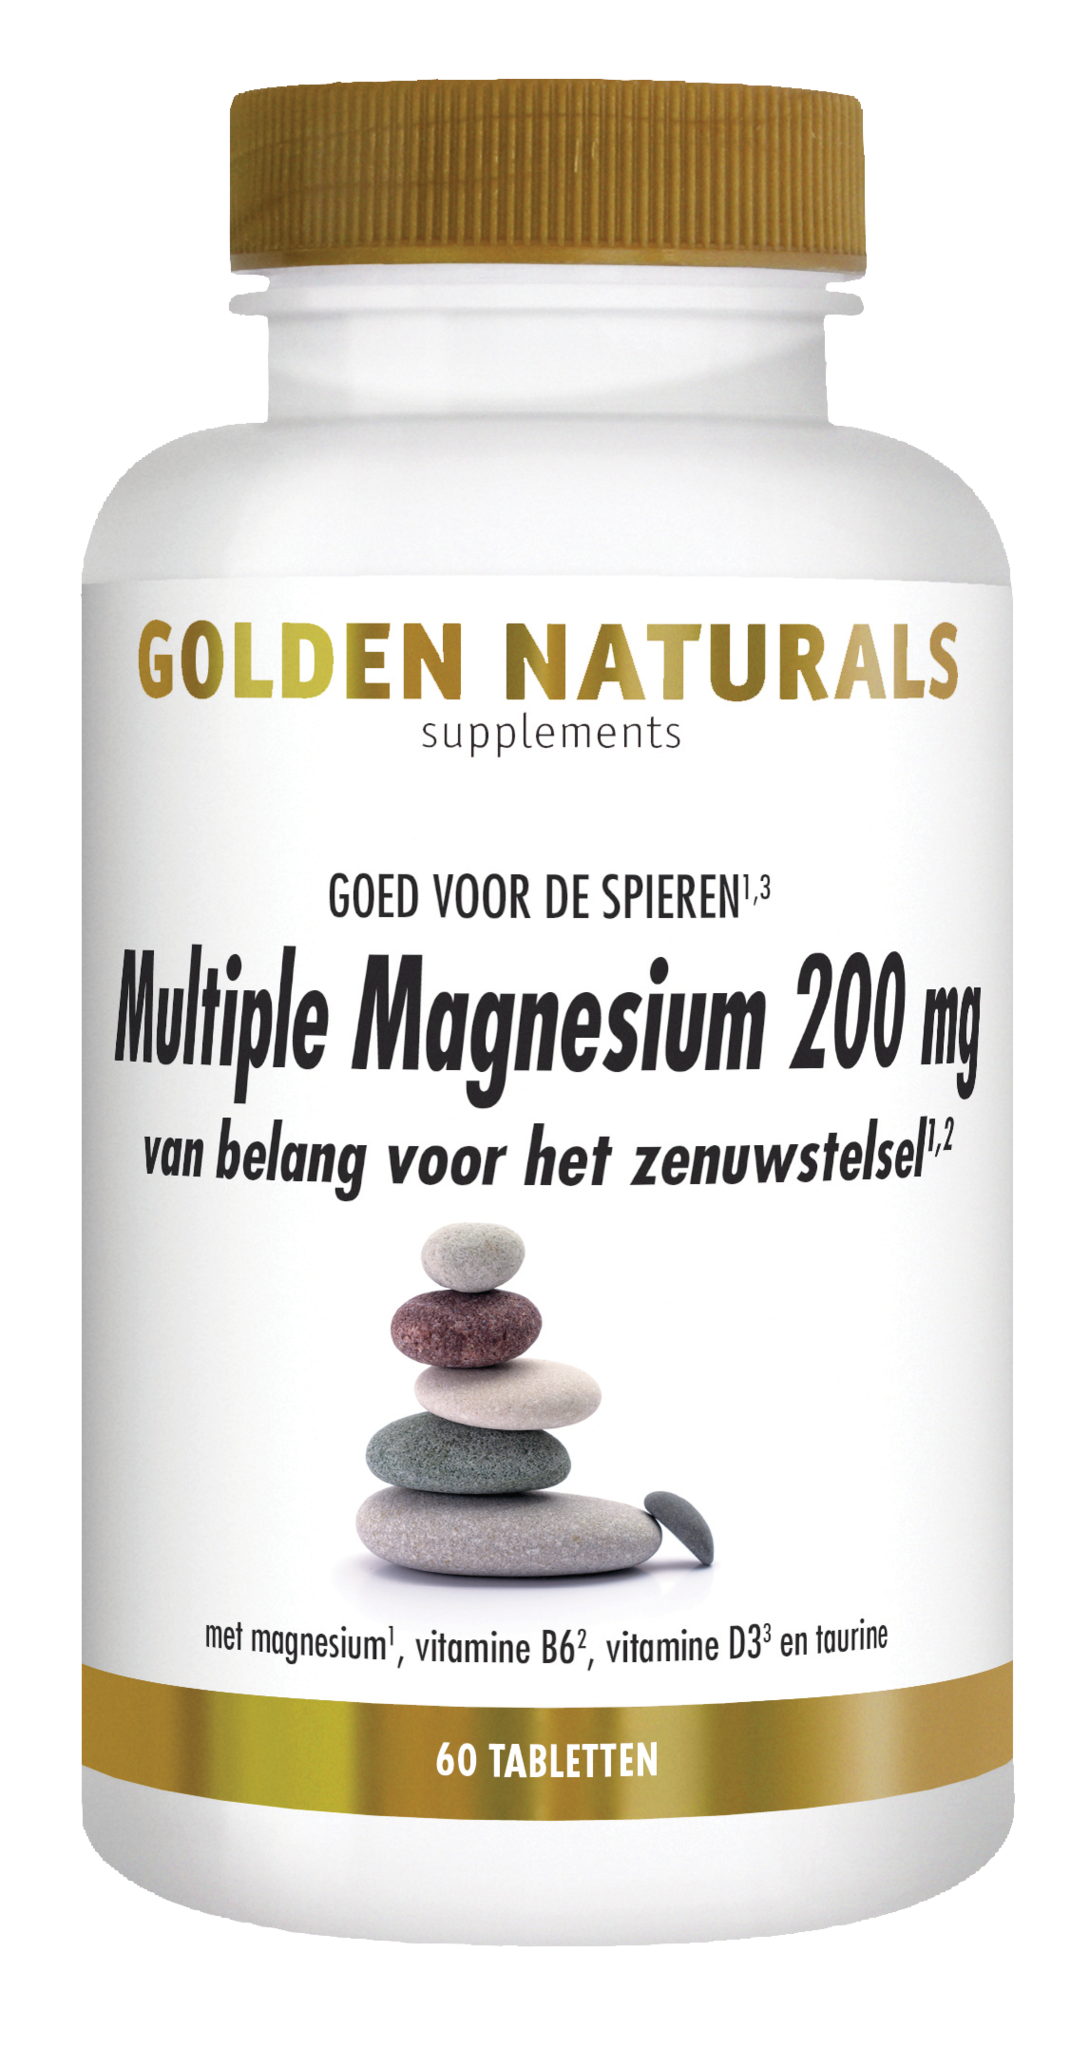 Golden Naturals Golden Naturals Multiple Magnesium 200 mg (60 Tabletten)